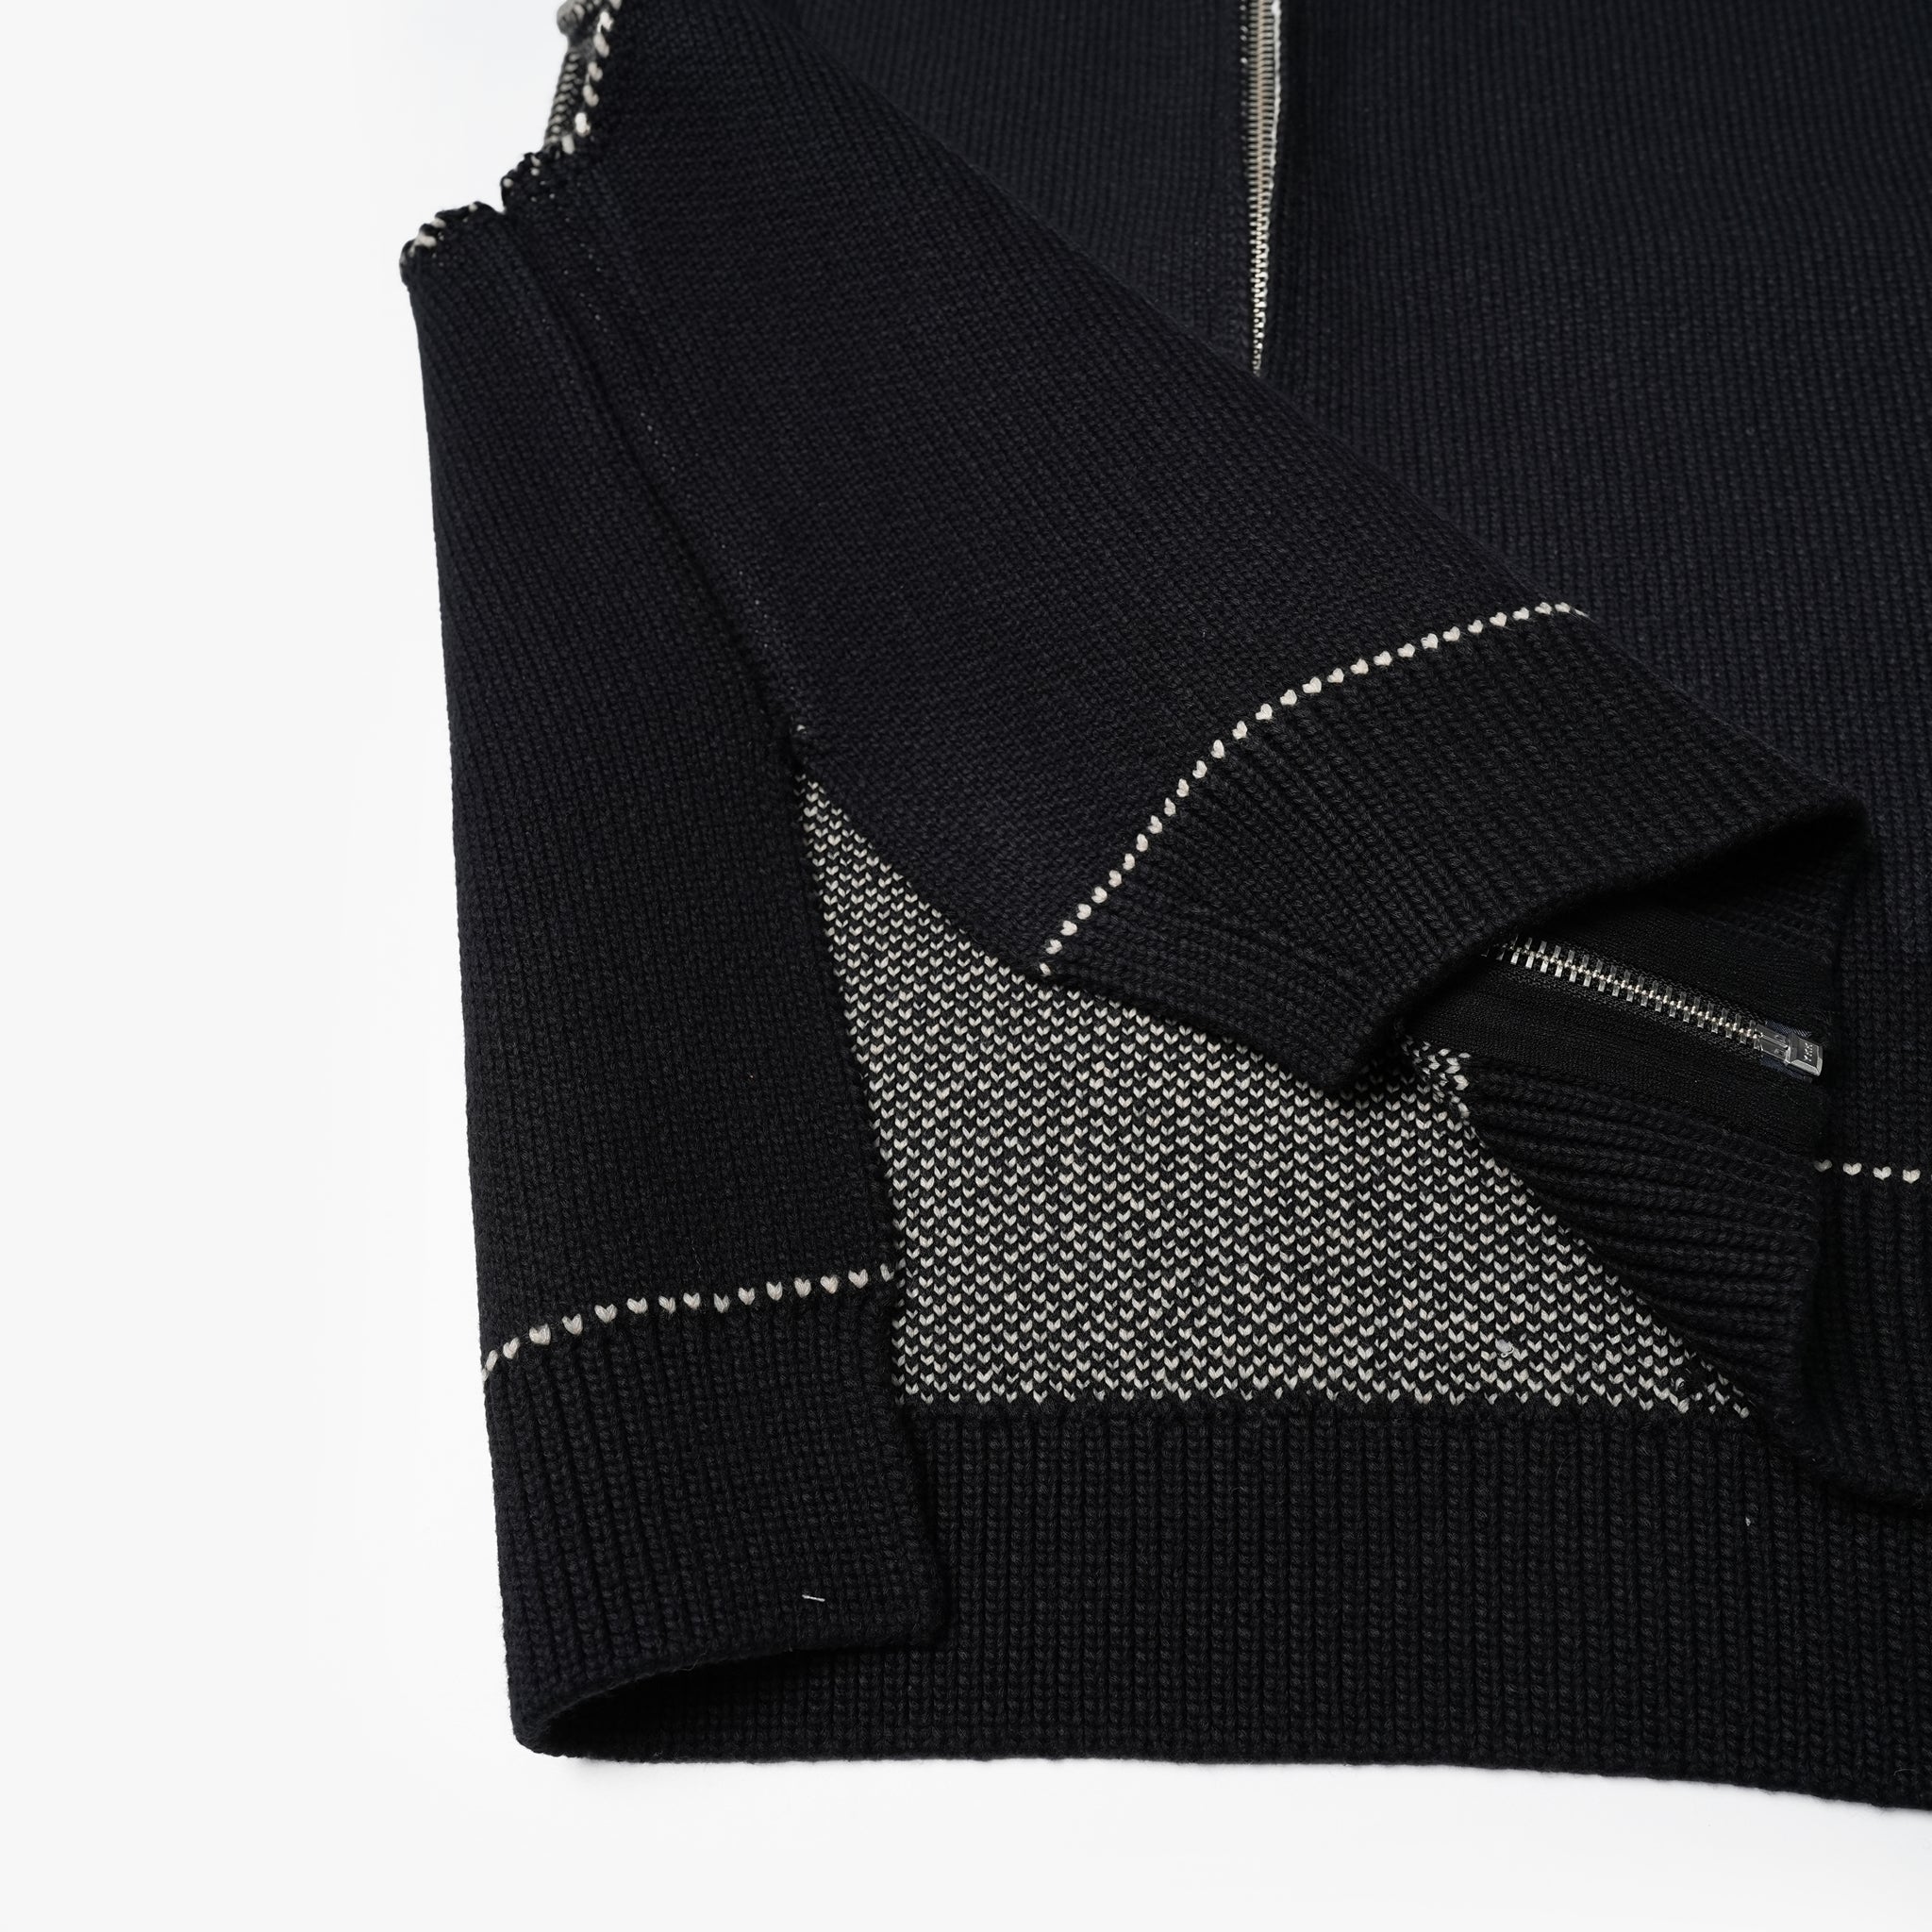 Name:Fringe Vest Sweater | Color:Black【AMBERGLEAM_アンバー 